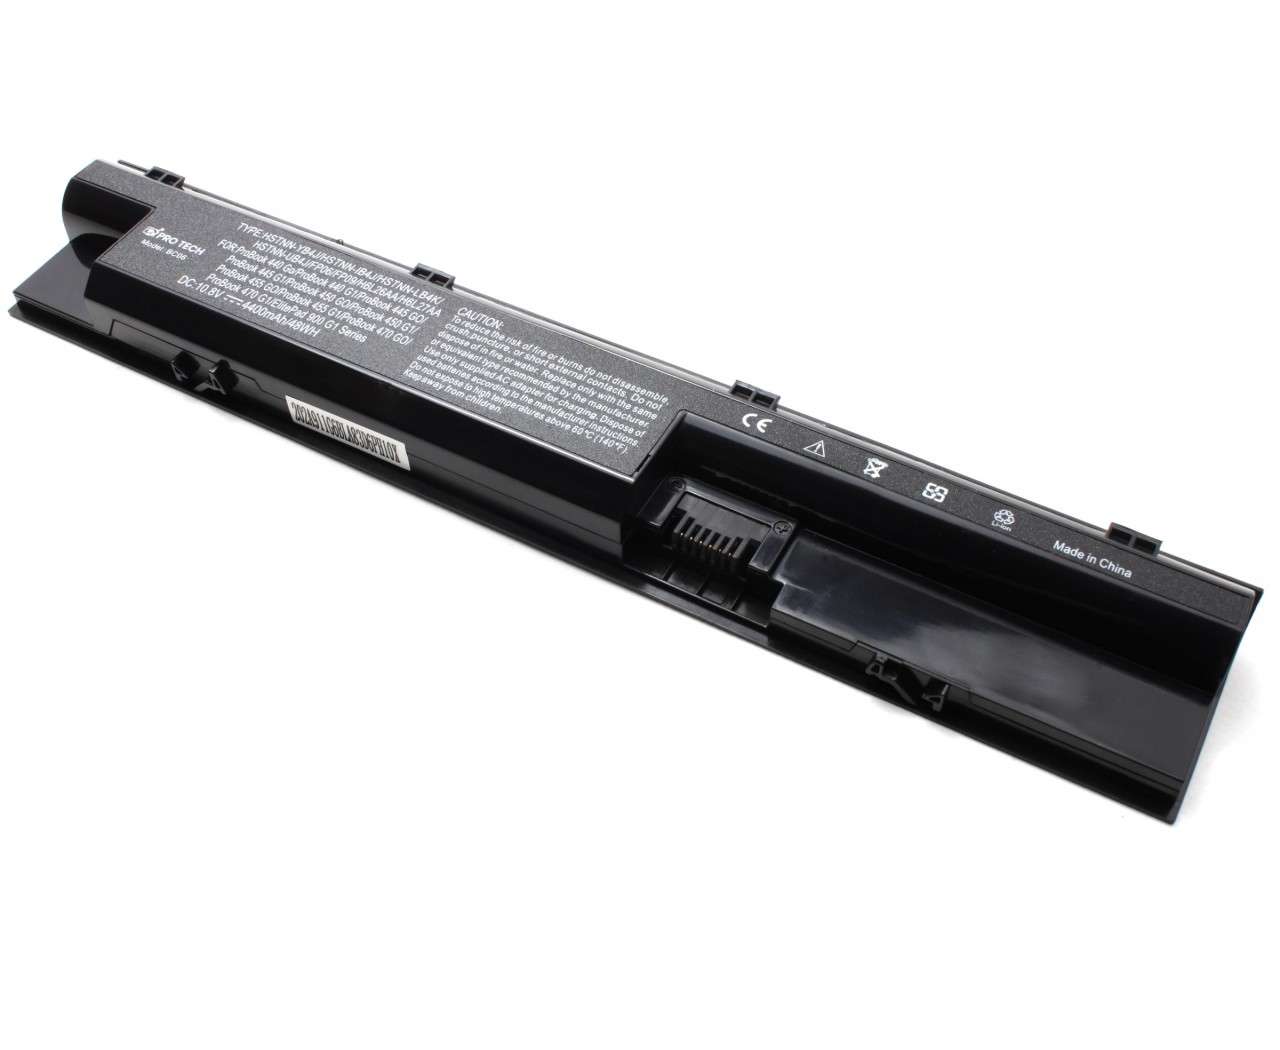 Baterie HP ProBook 708458 001